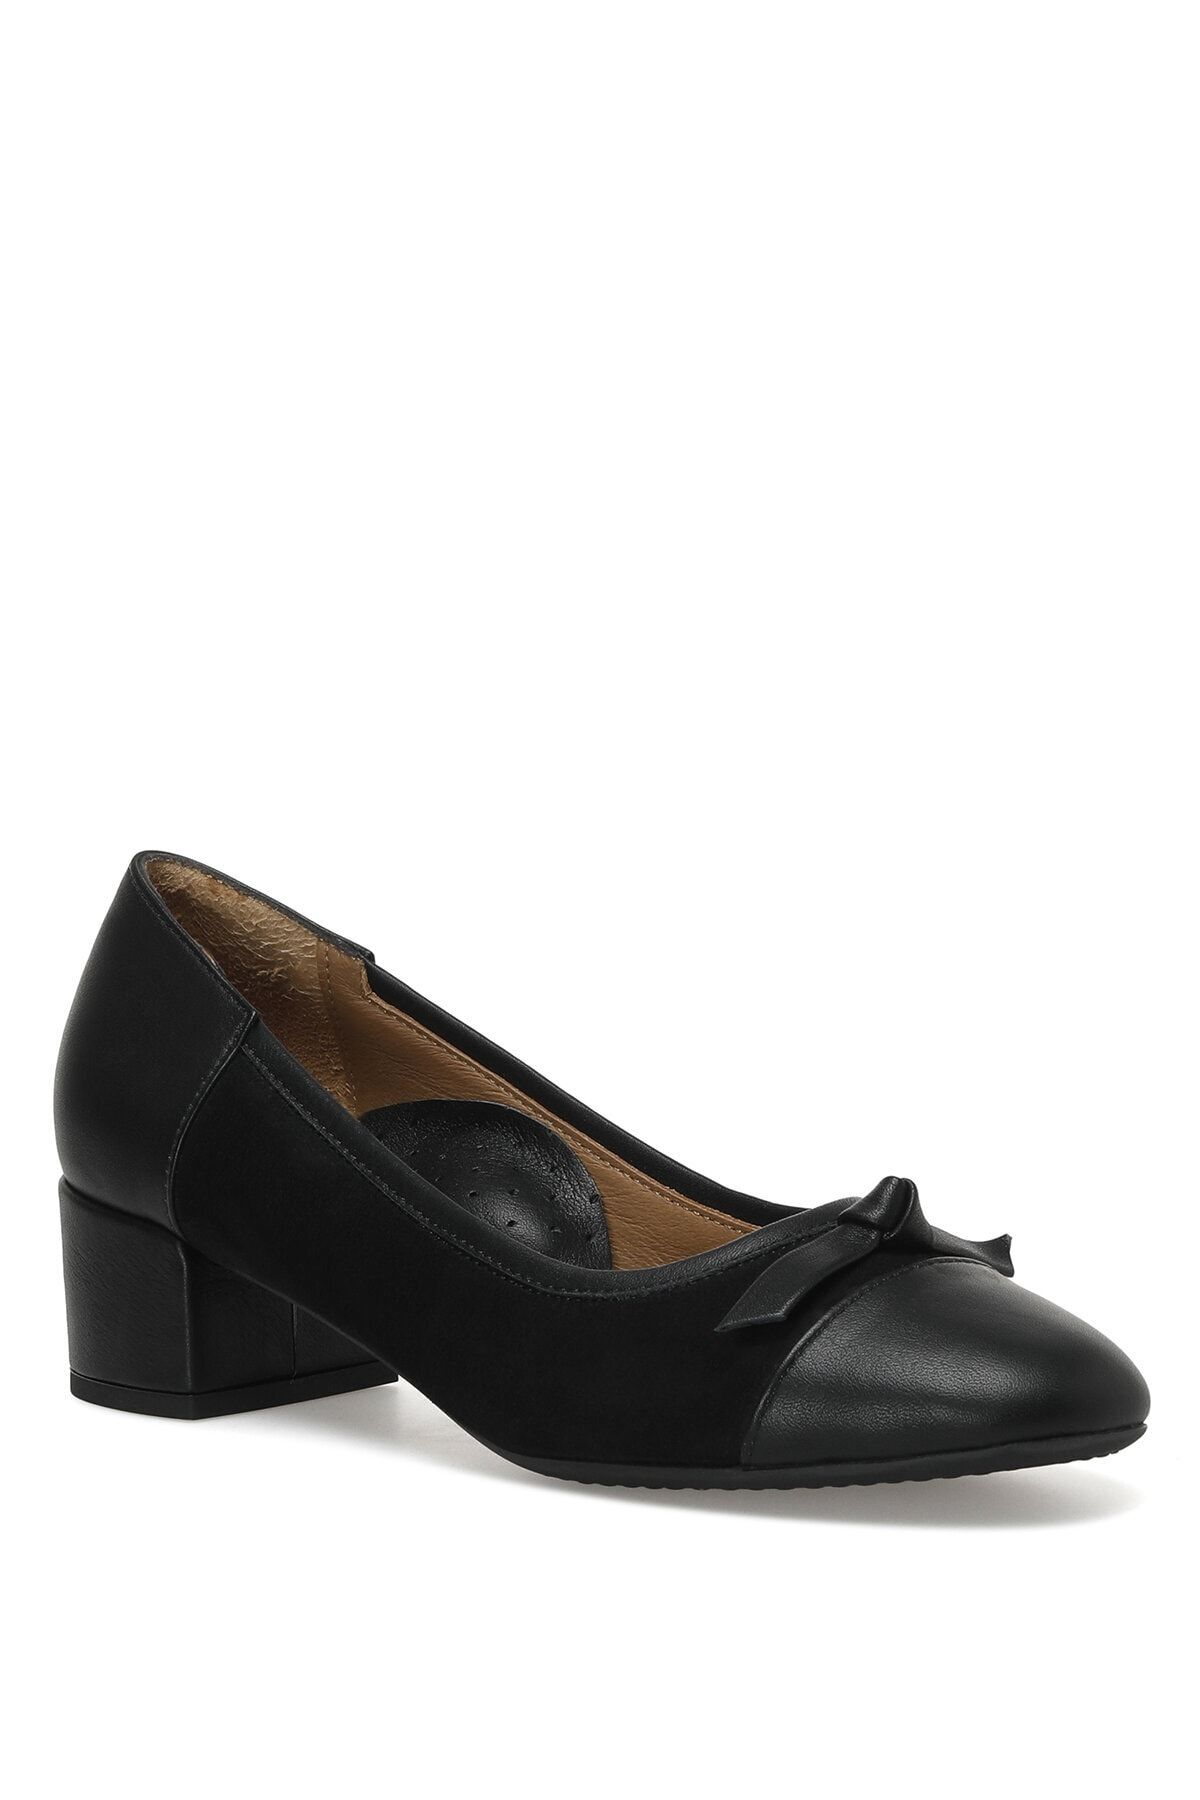 İnci Aronna 3fx Siyah Kadın Topuklu Ayakkabı